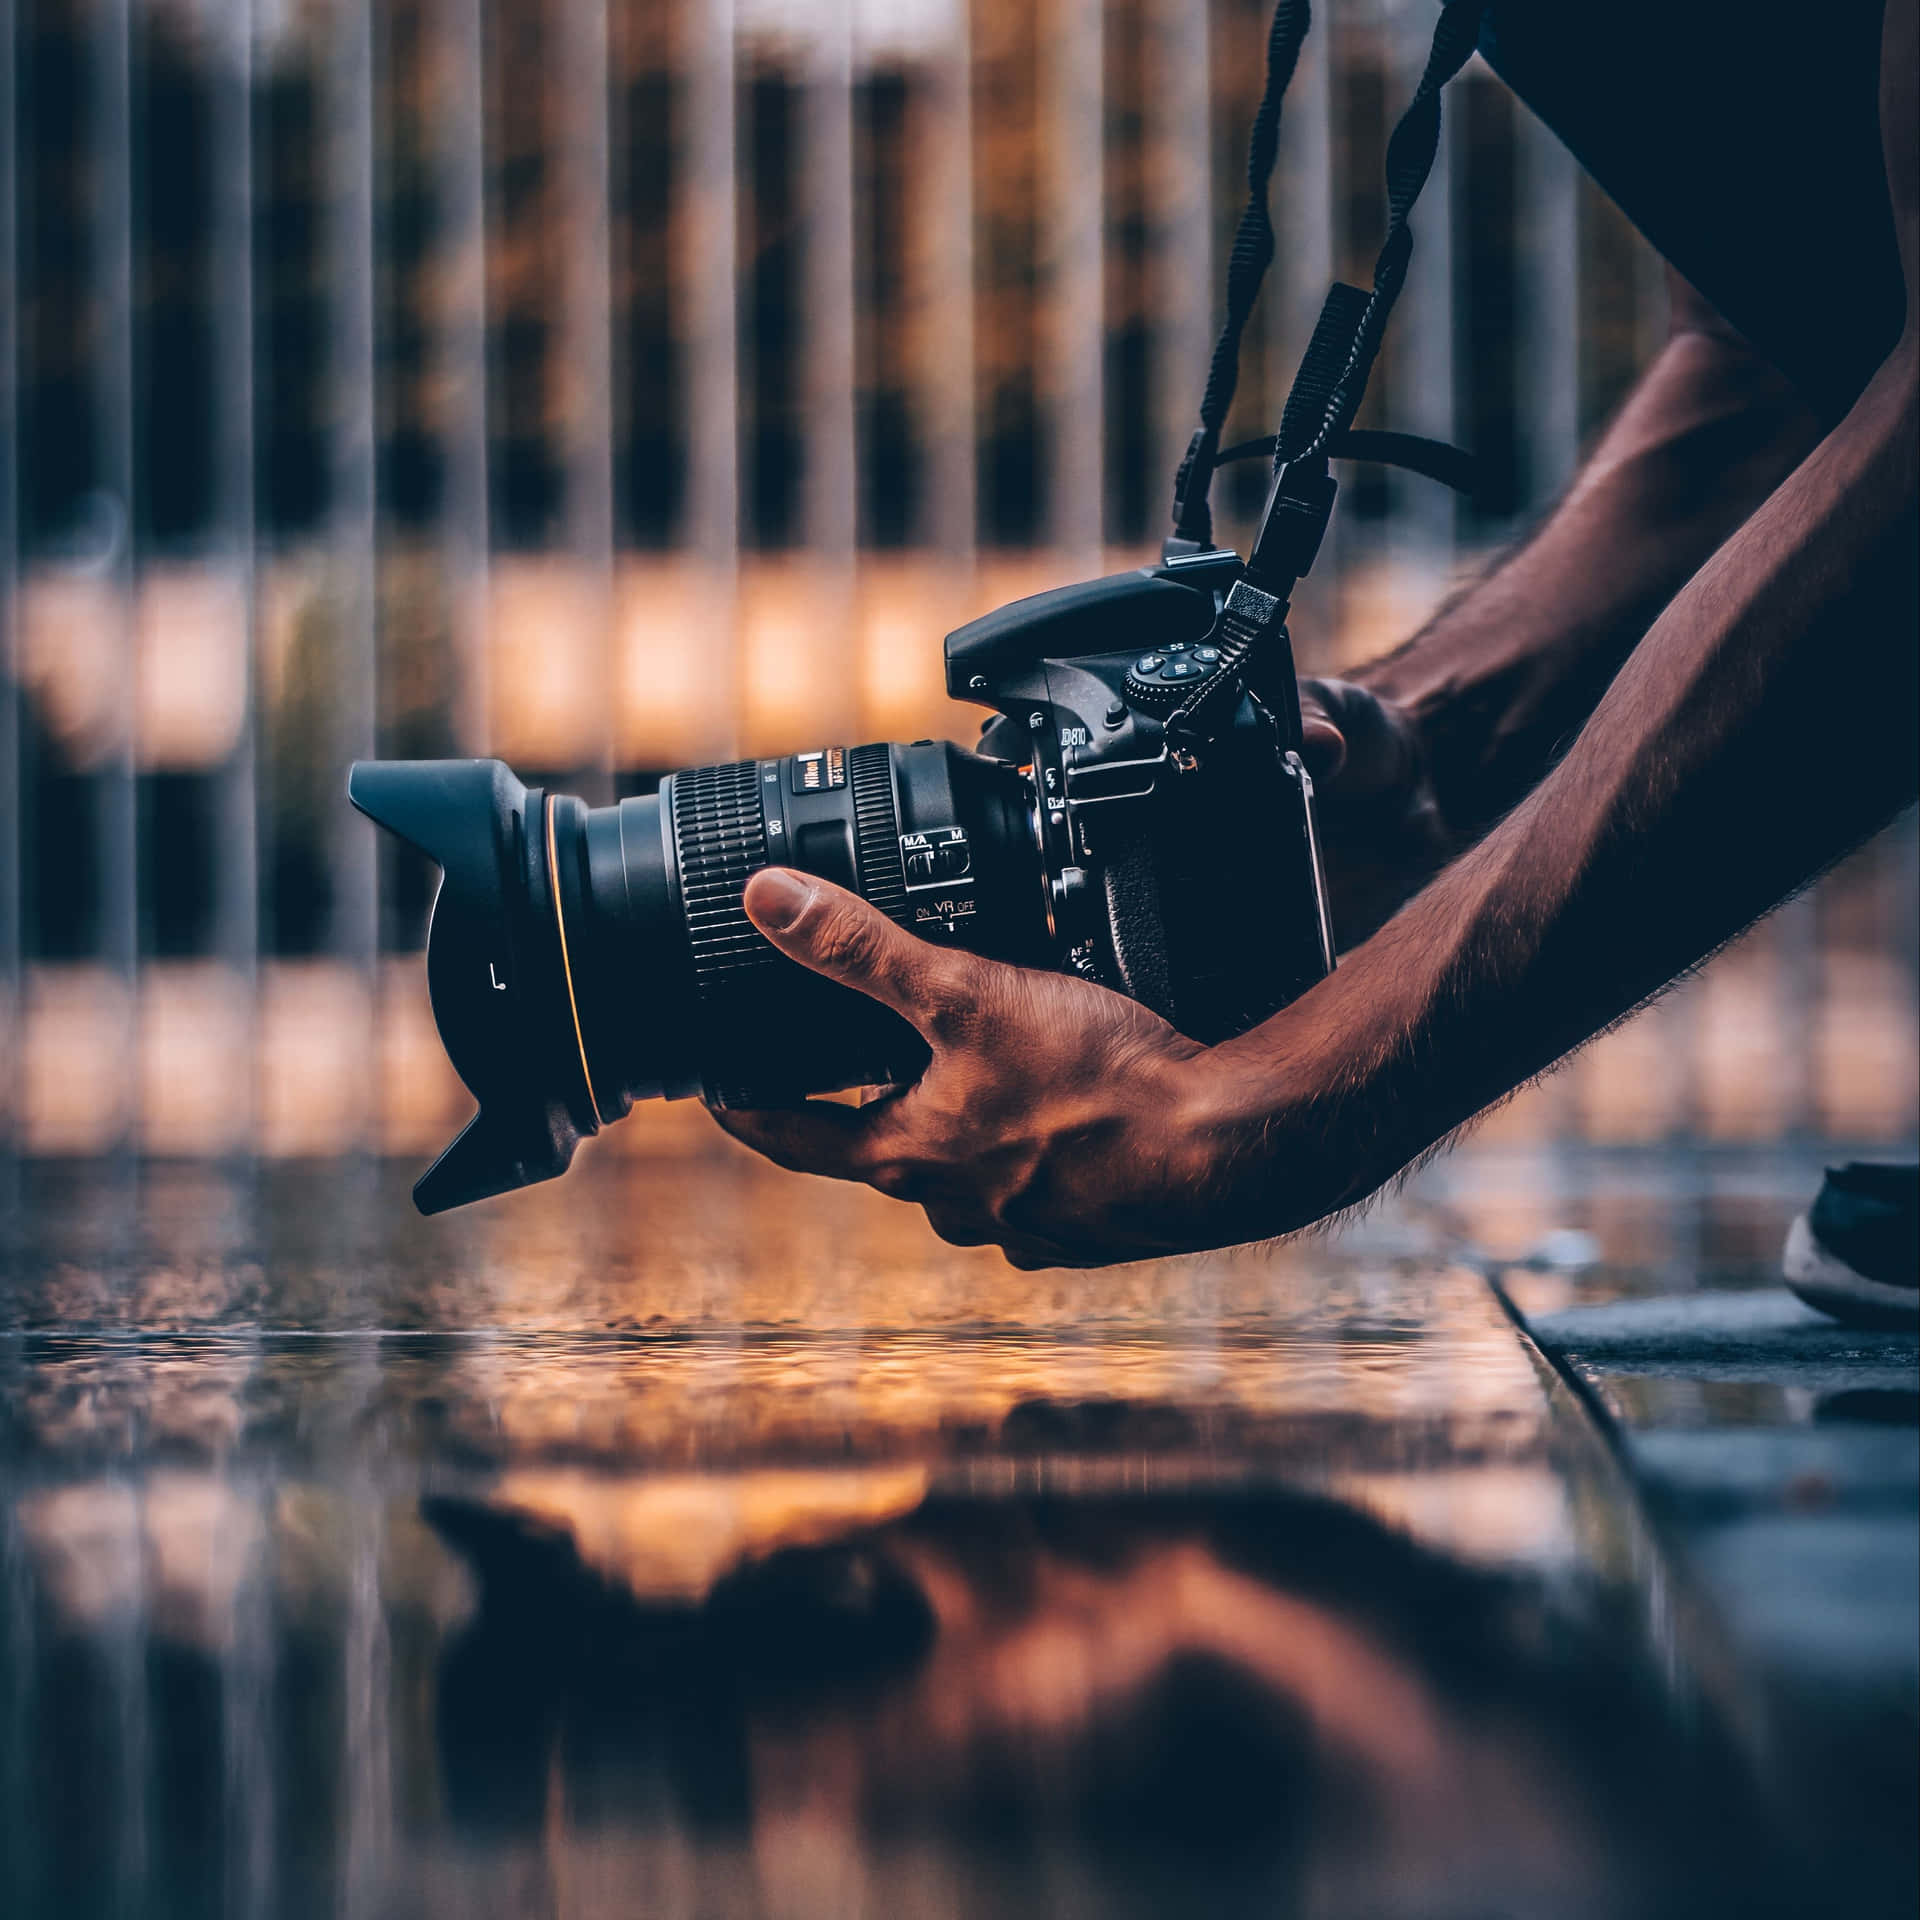 Wet Floor Shooting Photography Camera